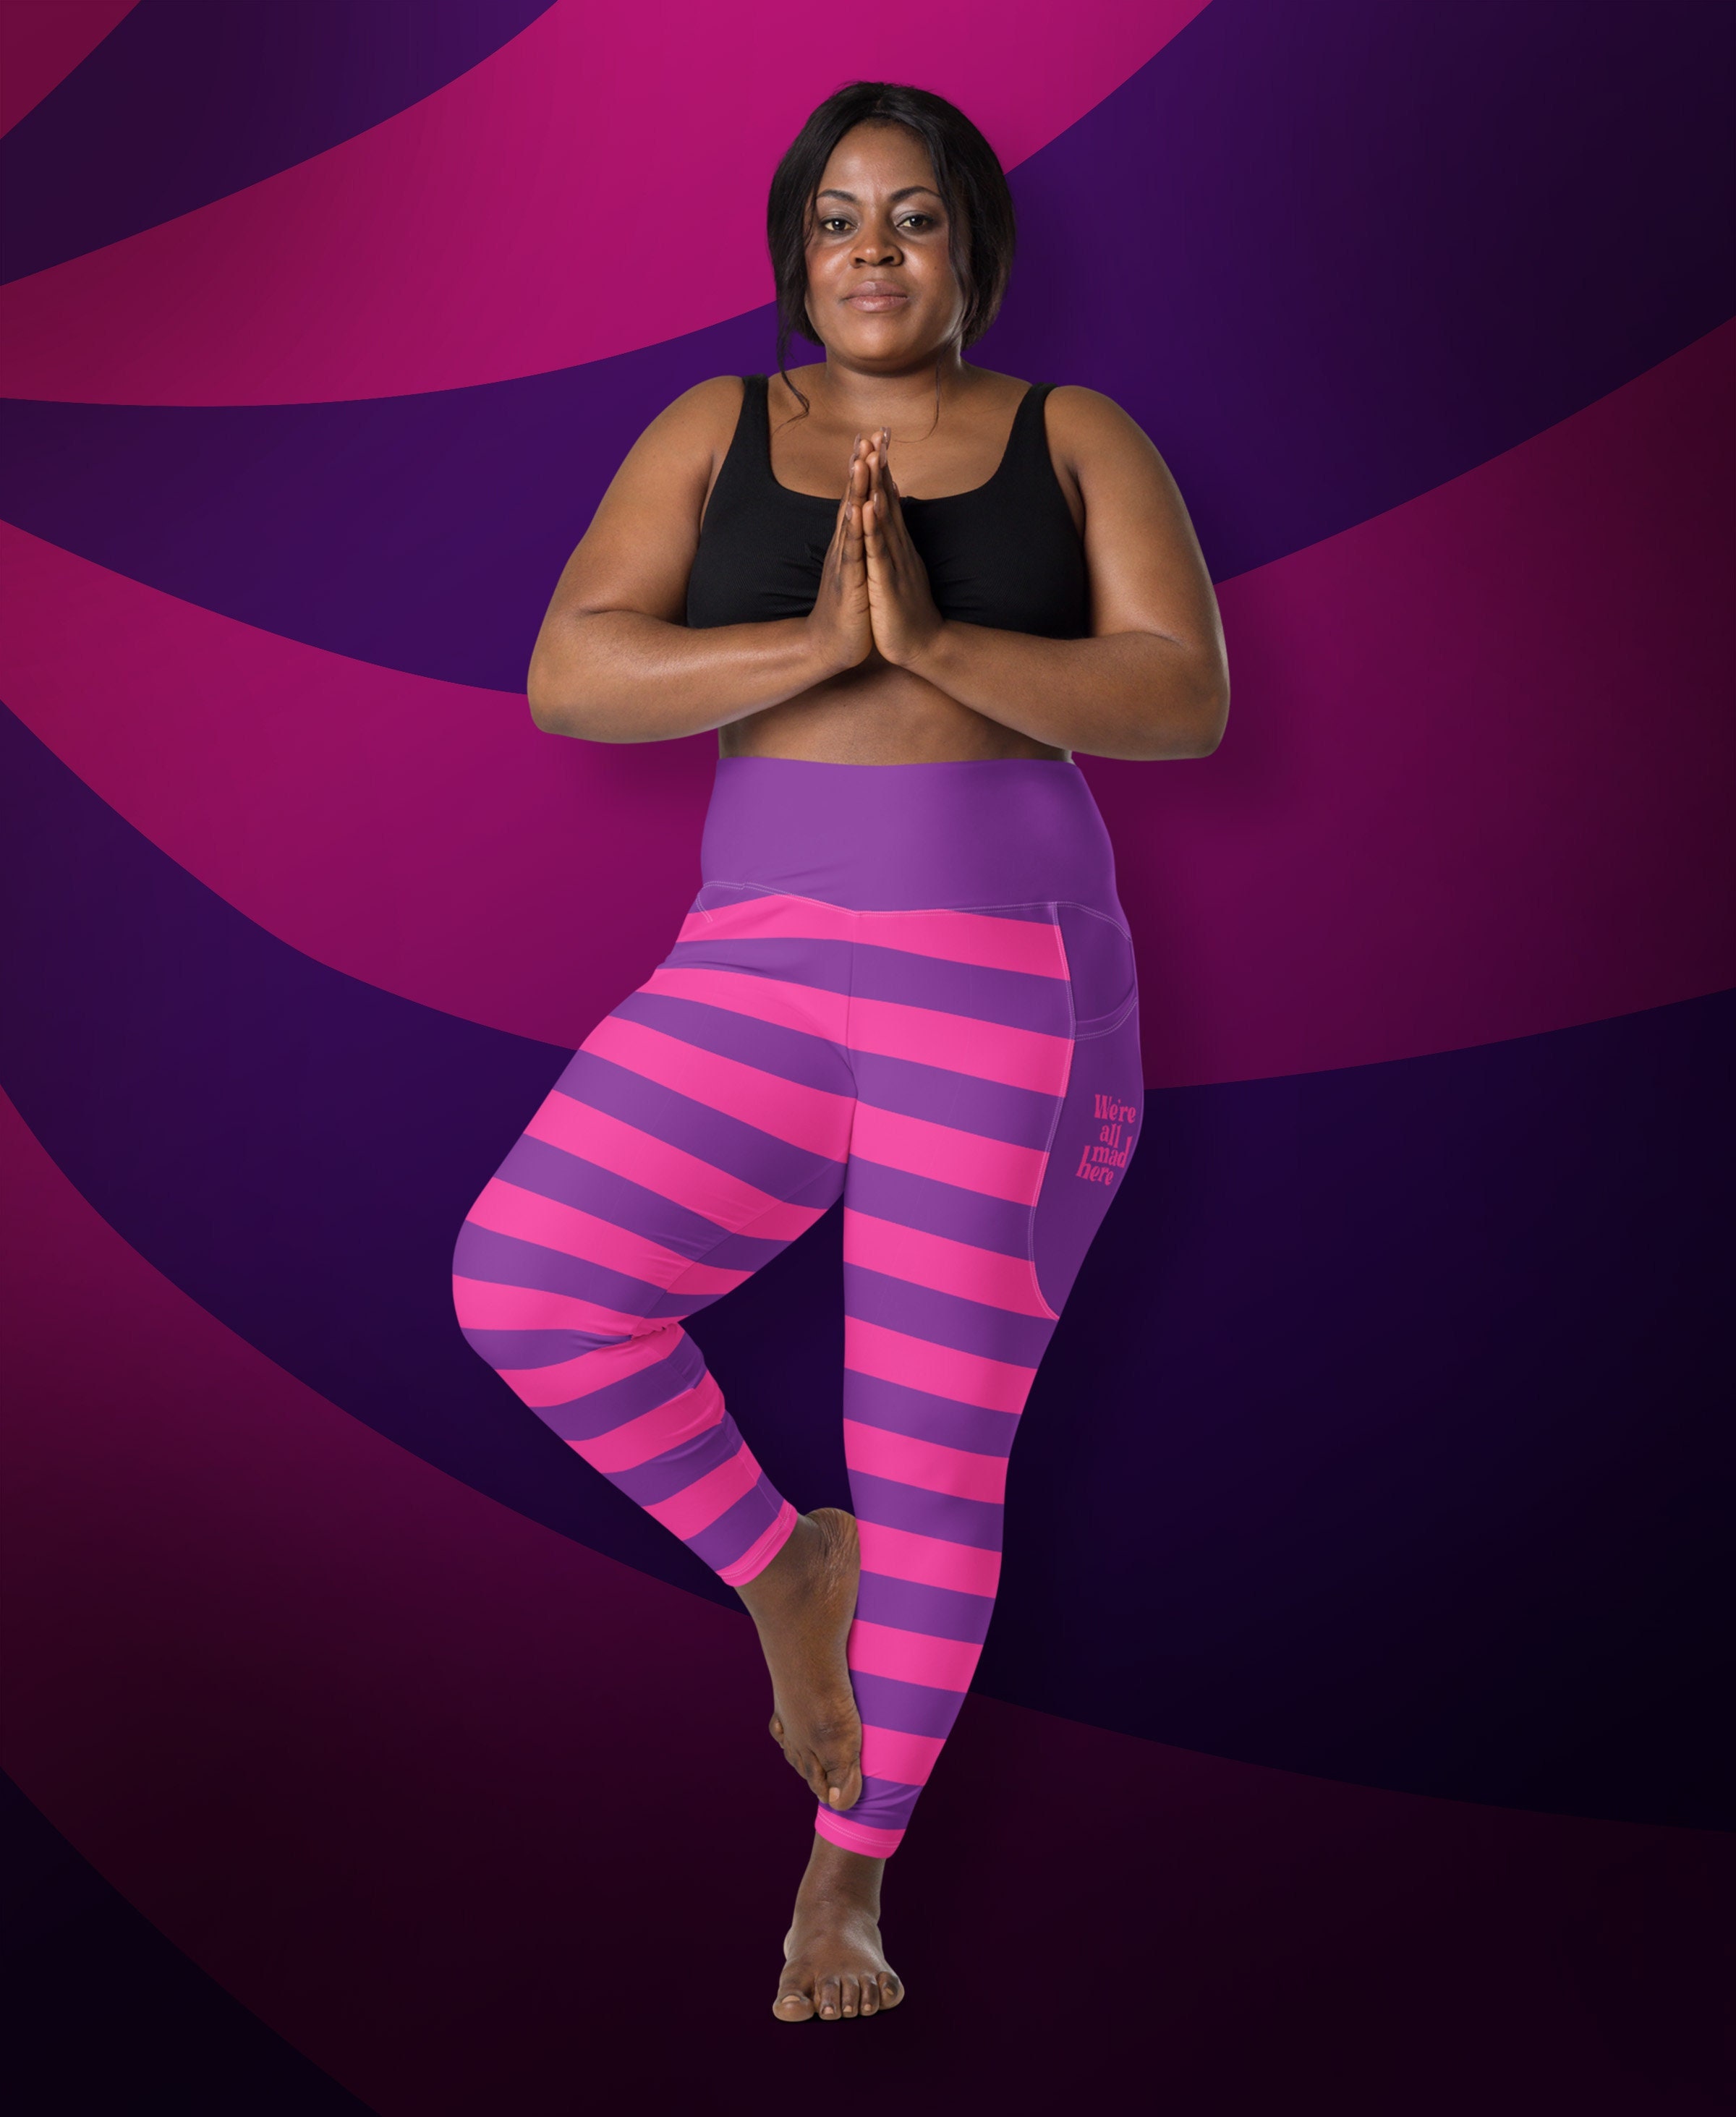 Mandala Yoga Leggings for Women, Yoga Capri Leggings With All Over Print  Mandala Tattoo, Perfect Mandala Pants for Your Yoga Wear 